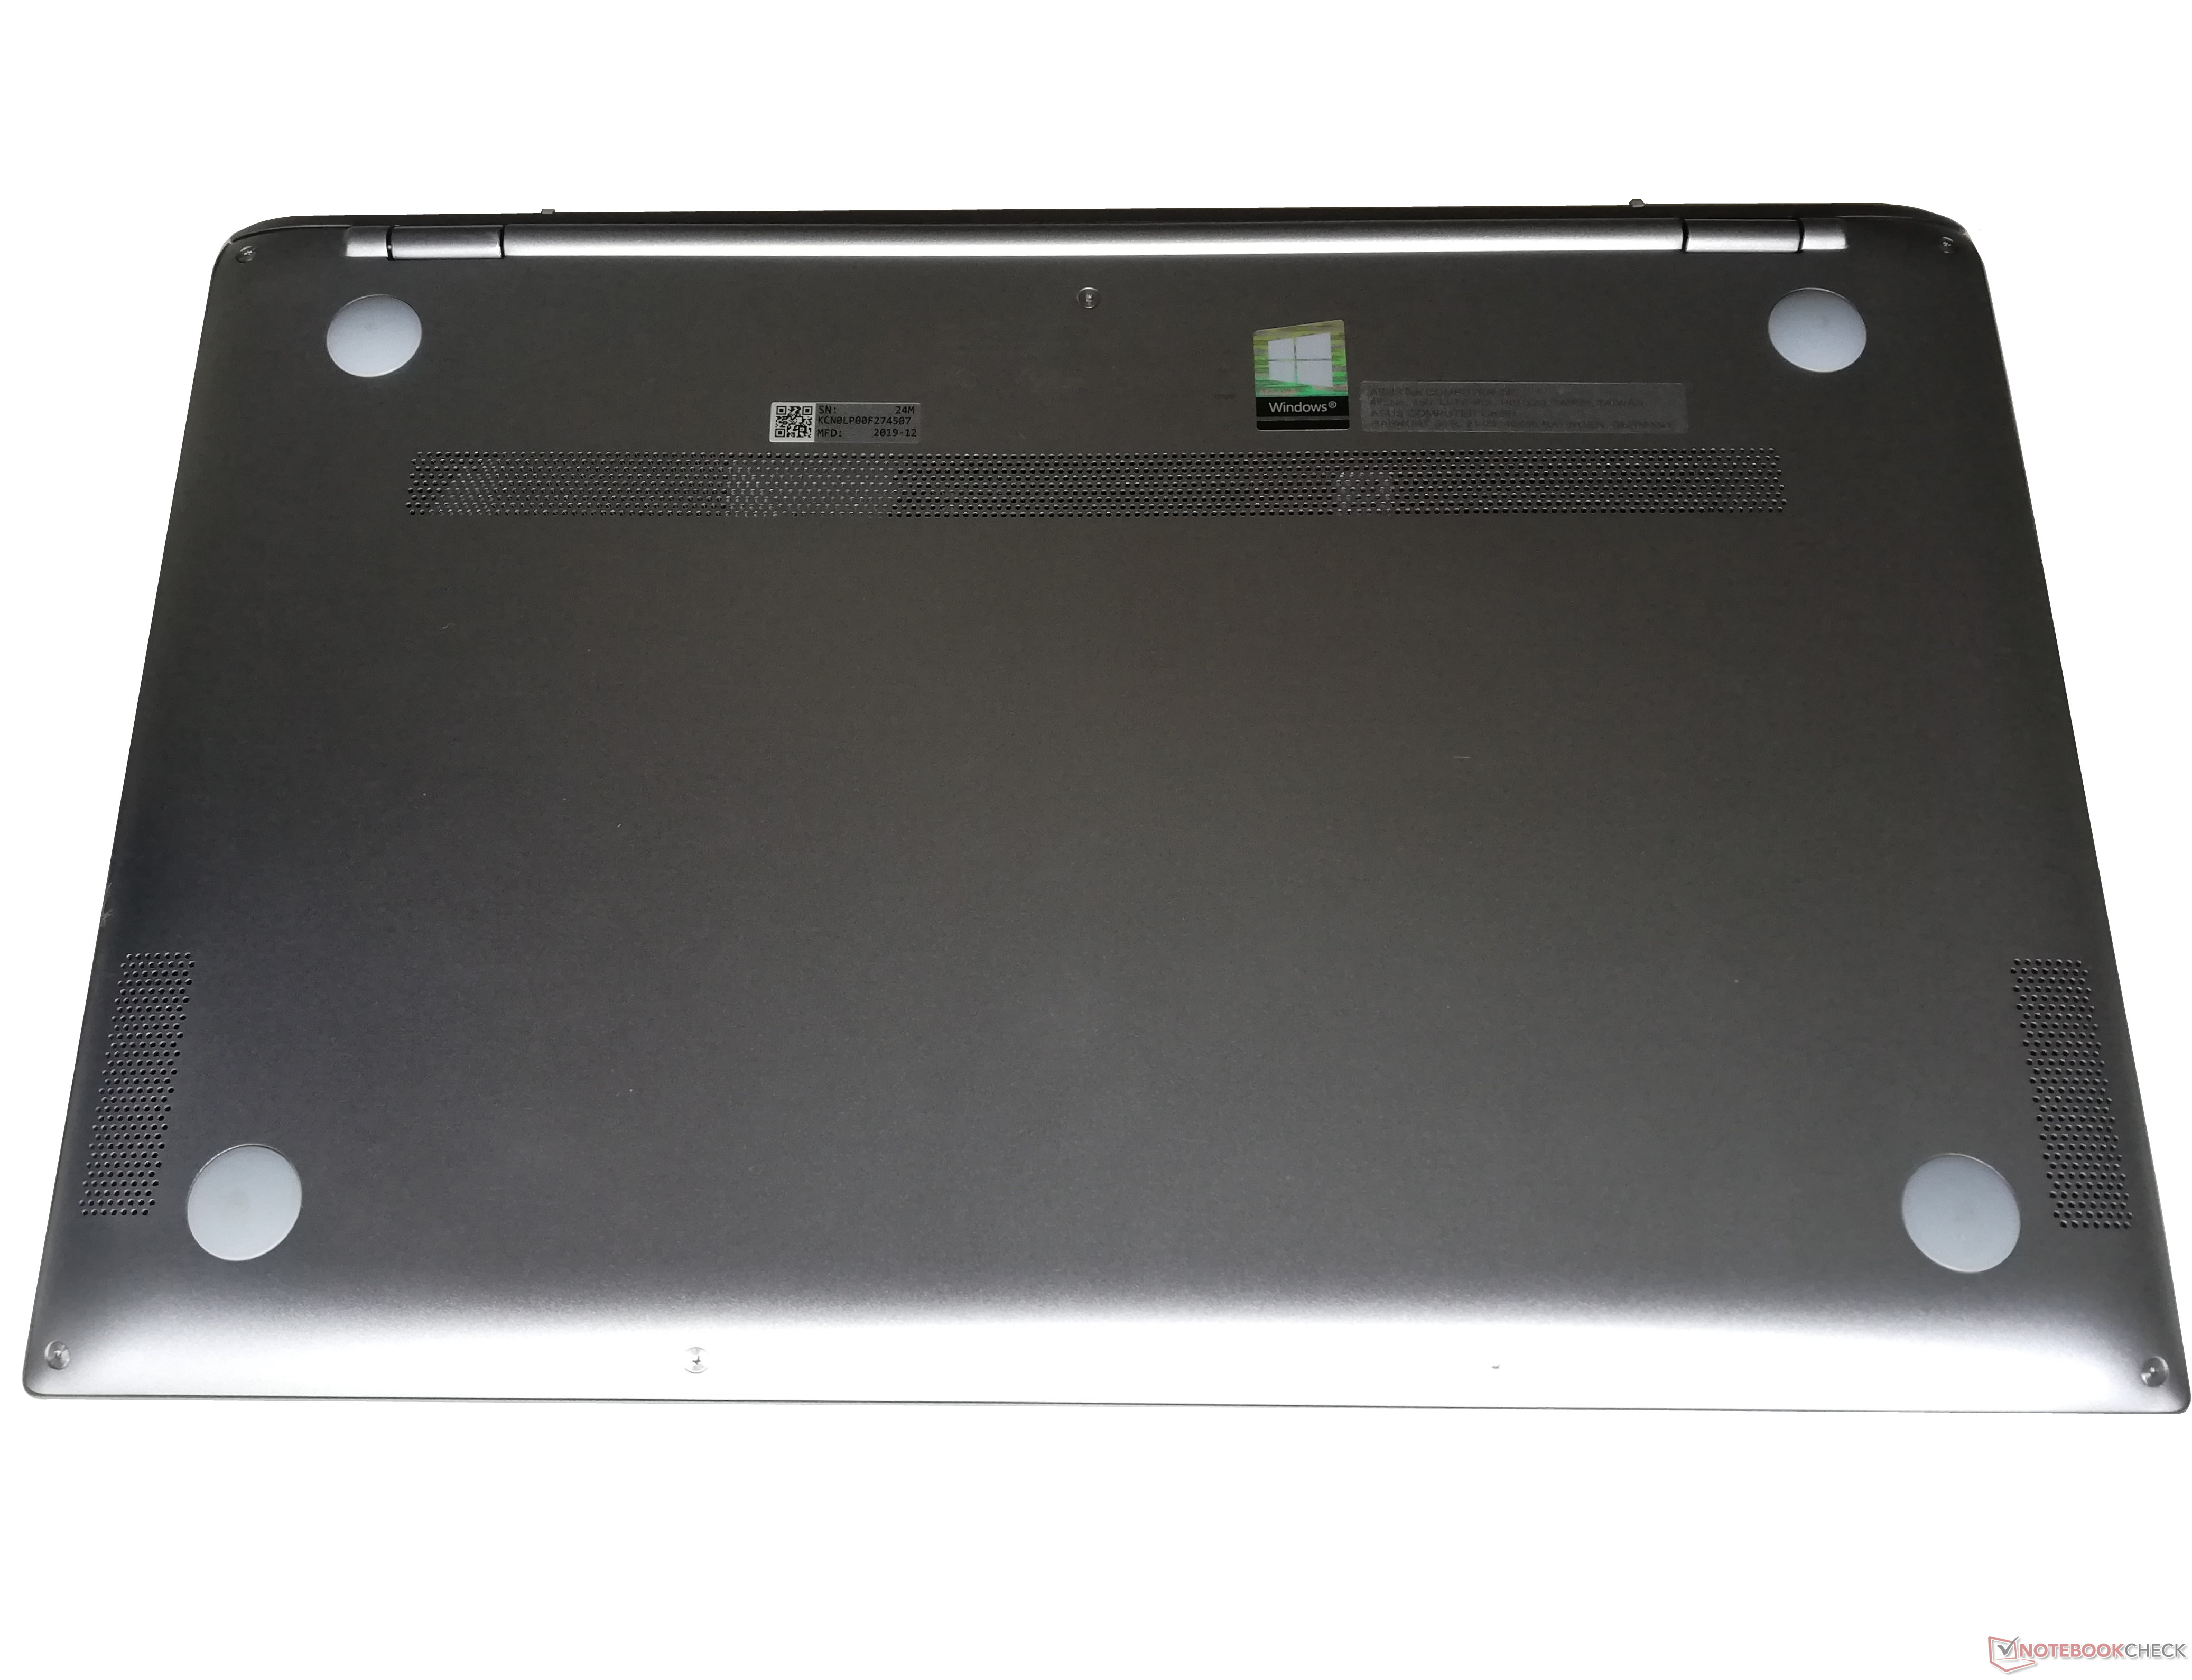 Asus ZenBook 14 UM431DA laptop review: Also makes a good impression